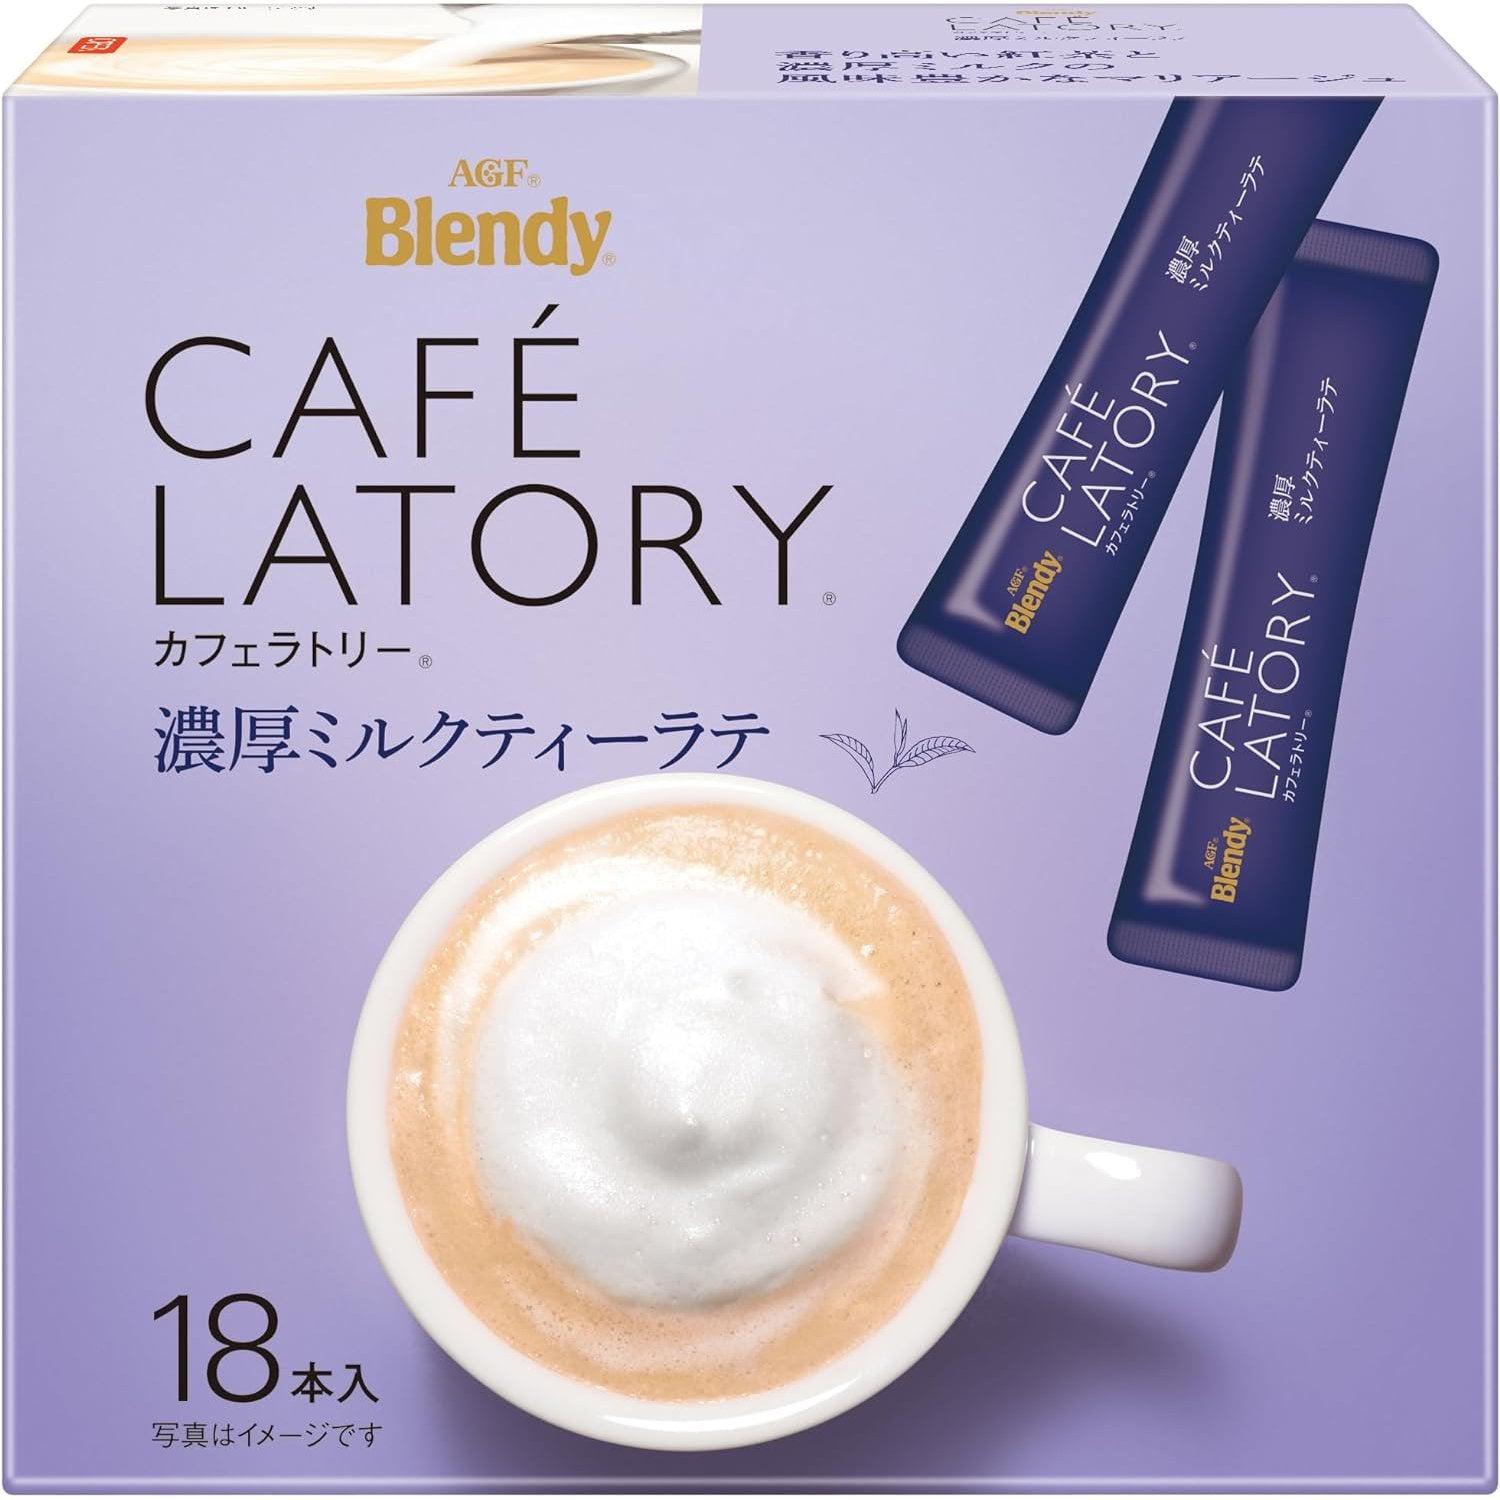 AGF Blendy Cafe Latory Rich Royal Milk Tea Cafe Latte 18 Sticks